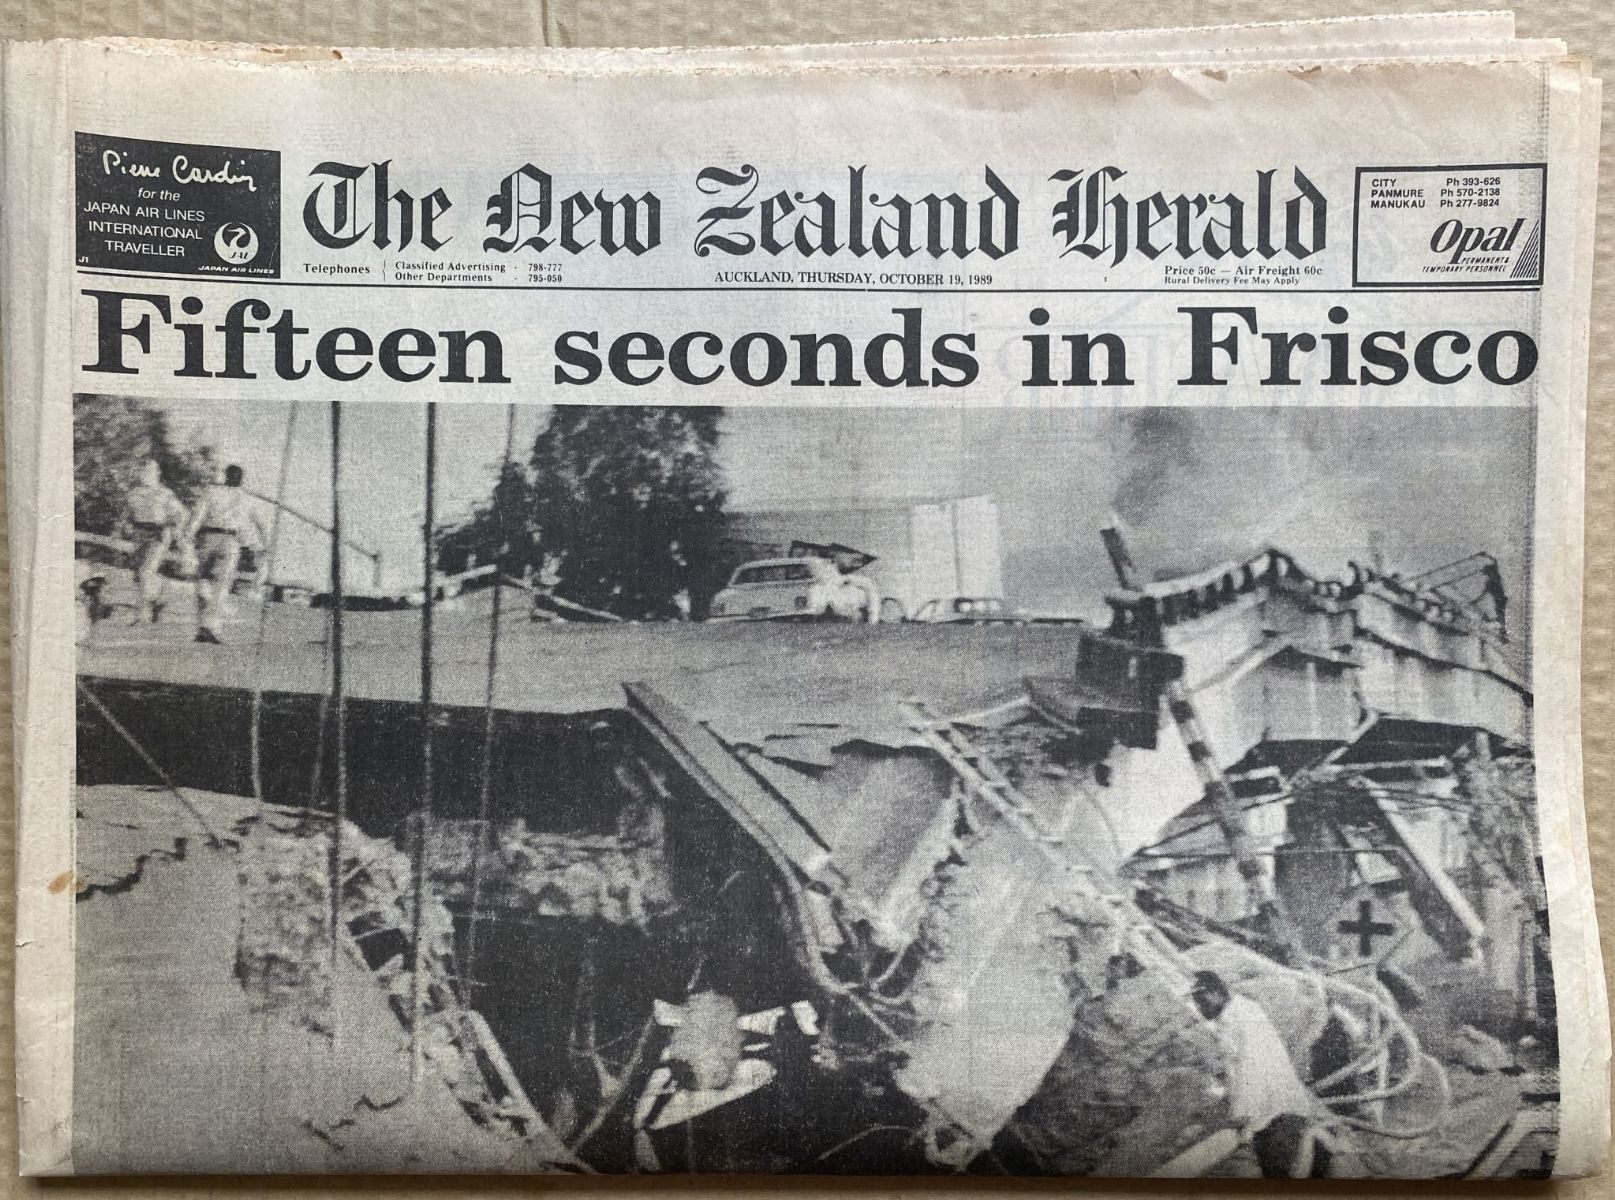 OLD NEWSPAPER: The New Zealand Herald, 19 October 1989 - San Francisco Quake